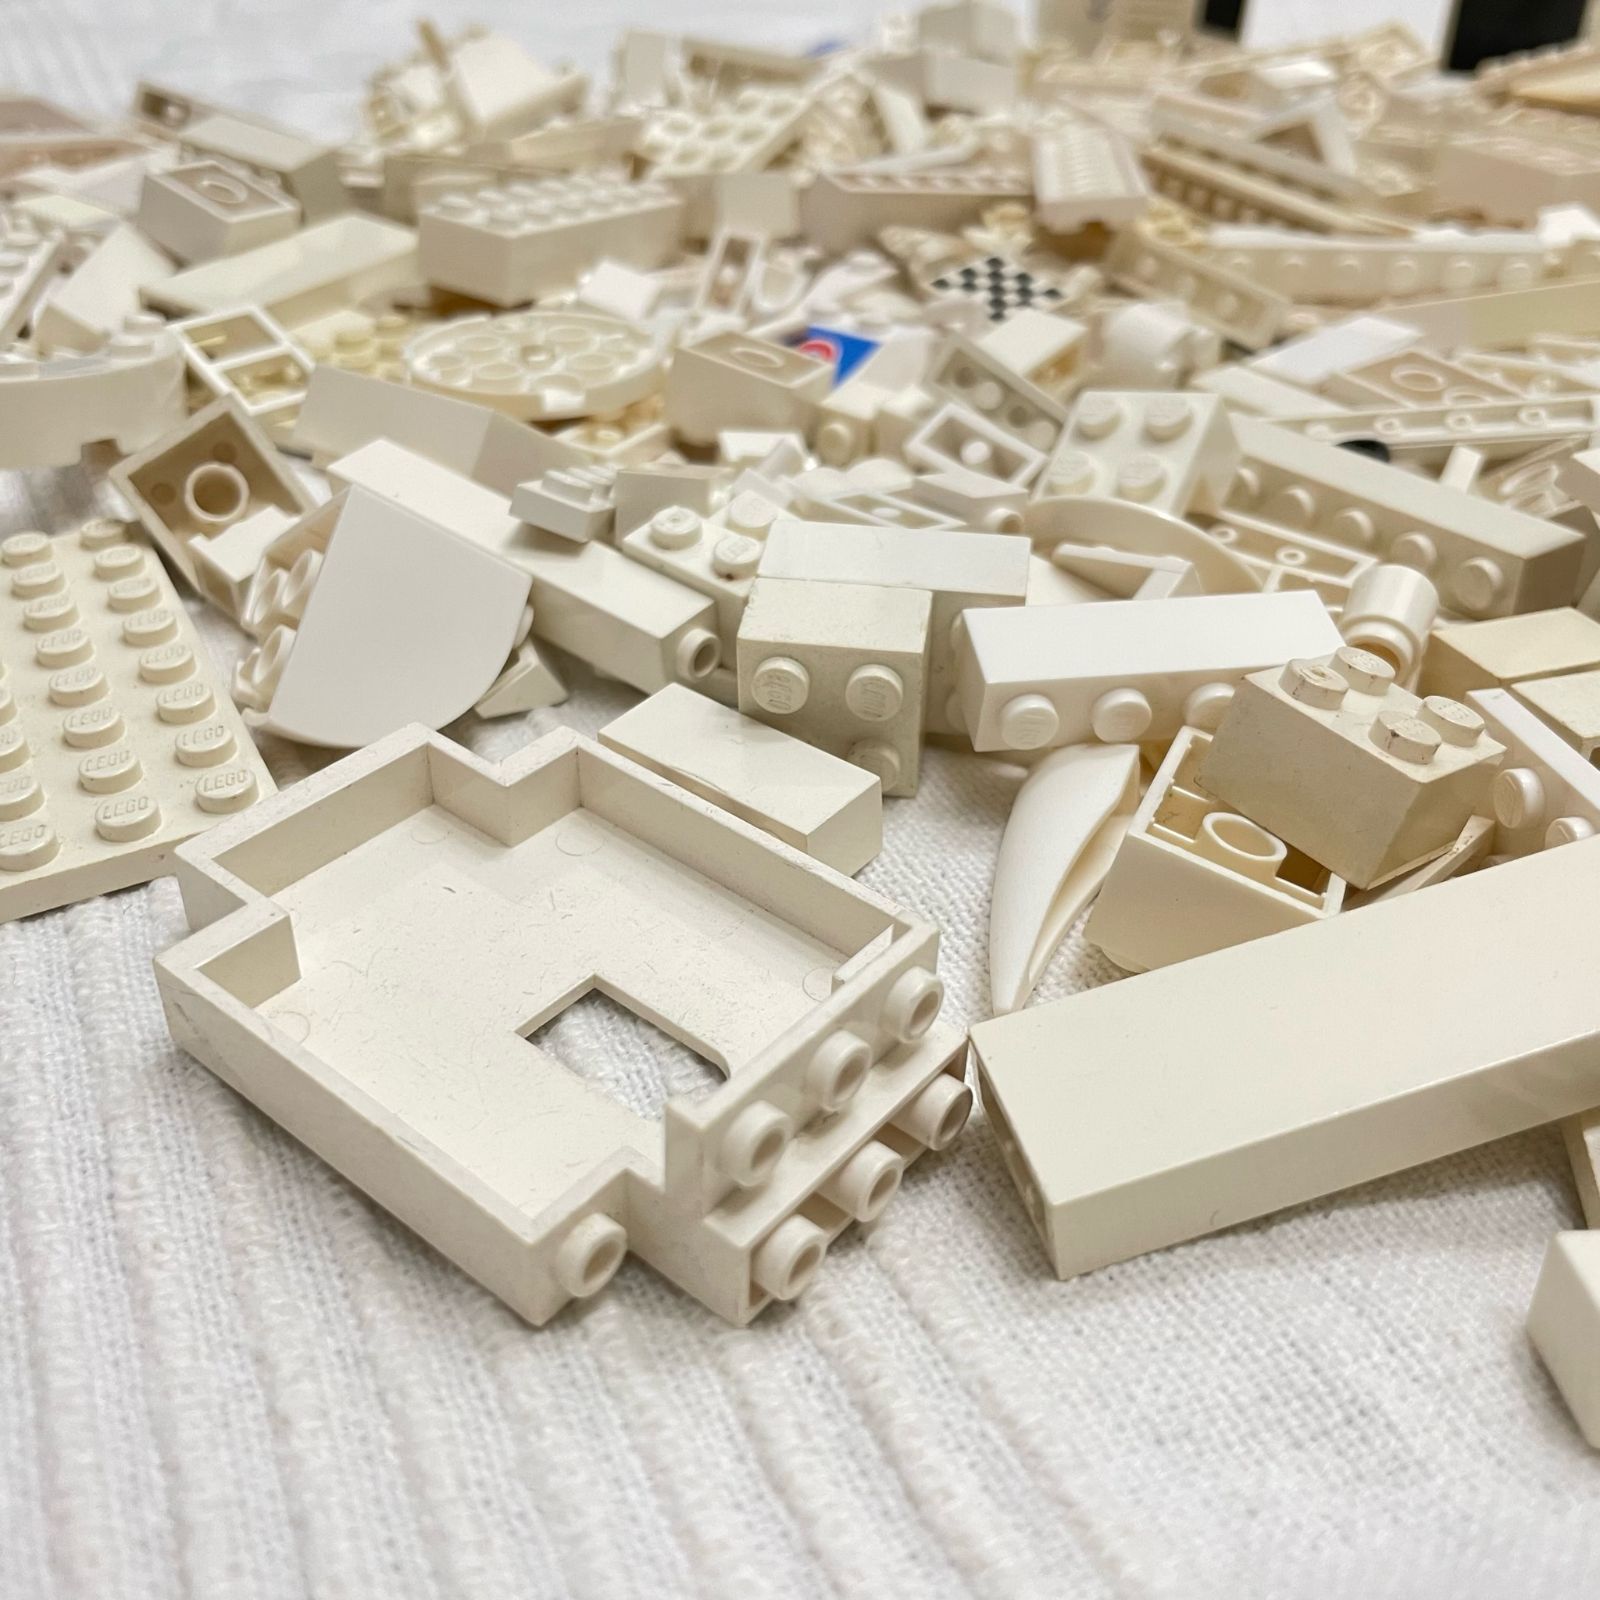 LEGO レゴ 白 ホワイト系 中古 ジャンク パーツ ブロック プレート 電車 大量 ばら売り 部品取り LY-230420-04  LY-230420-05